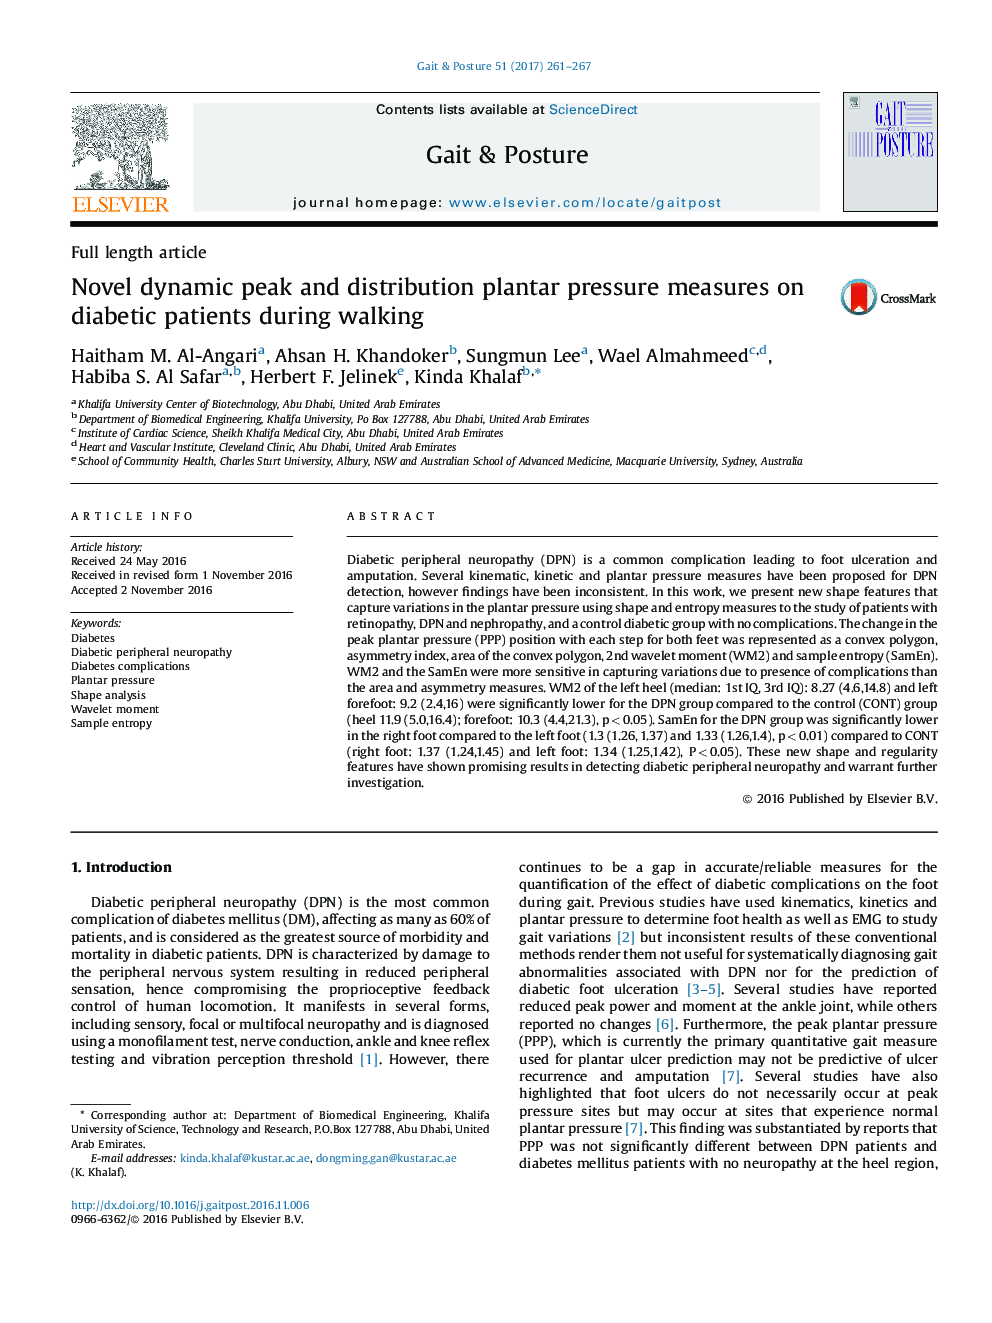 Novel dynamic peak and distribution plantar pressure measures on diabetic patients during walking